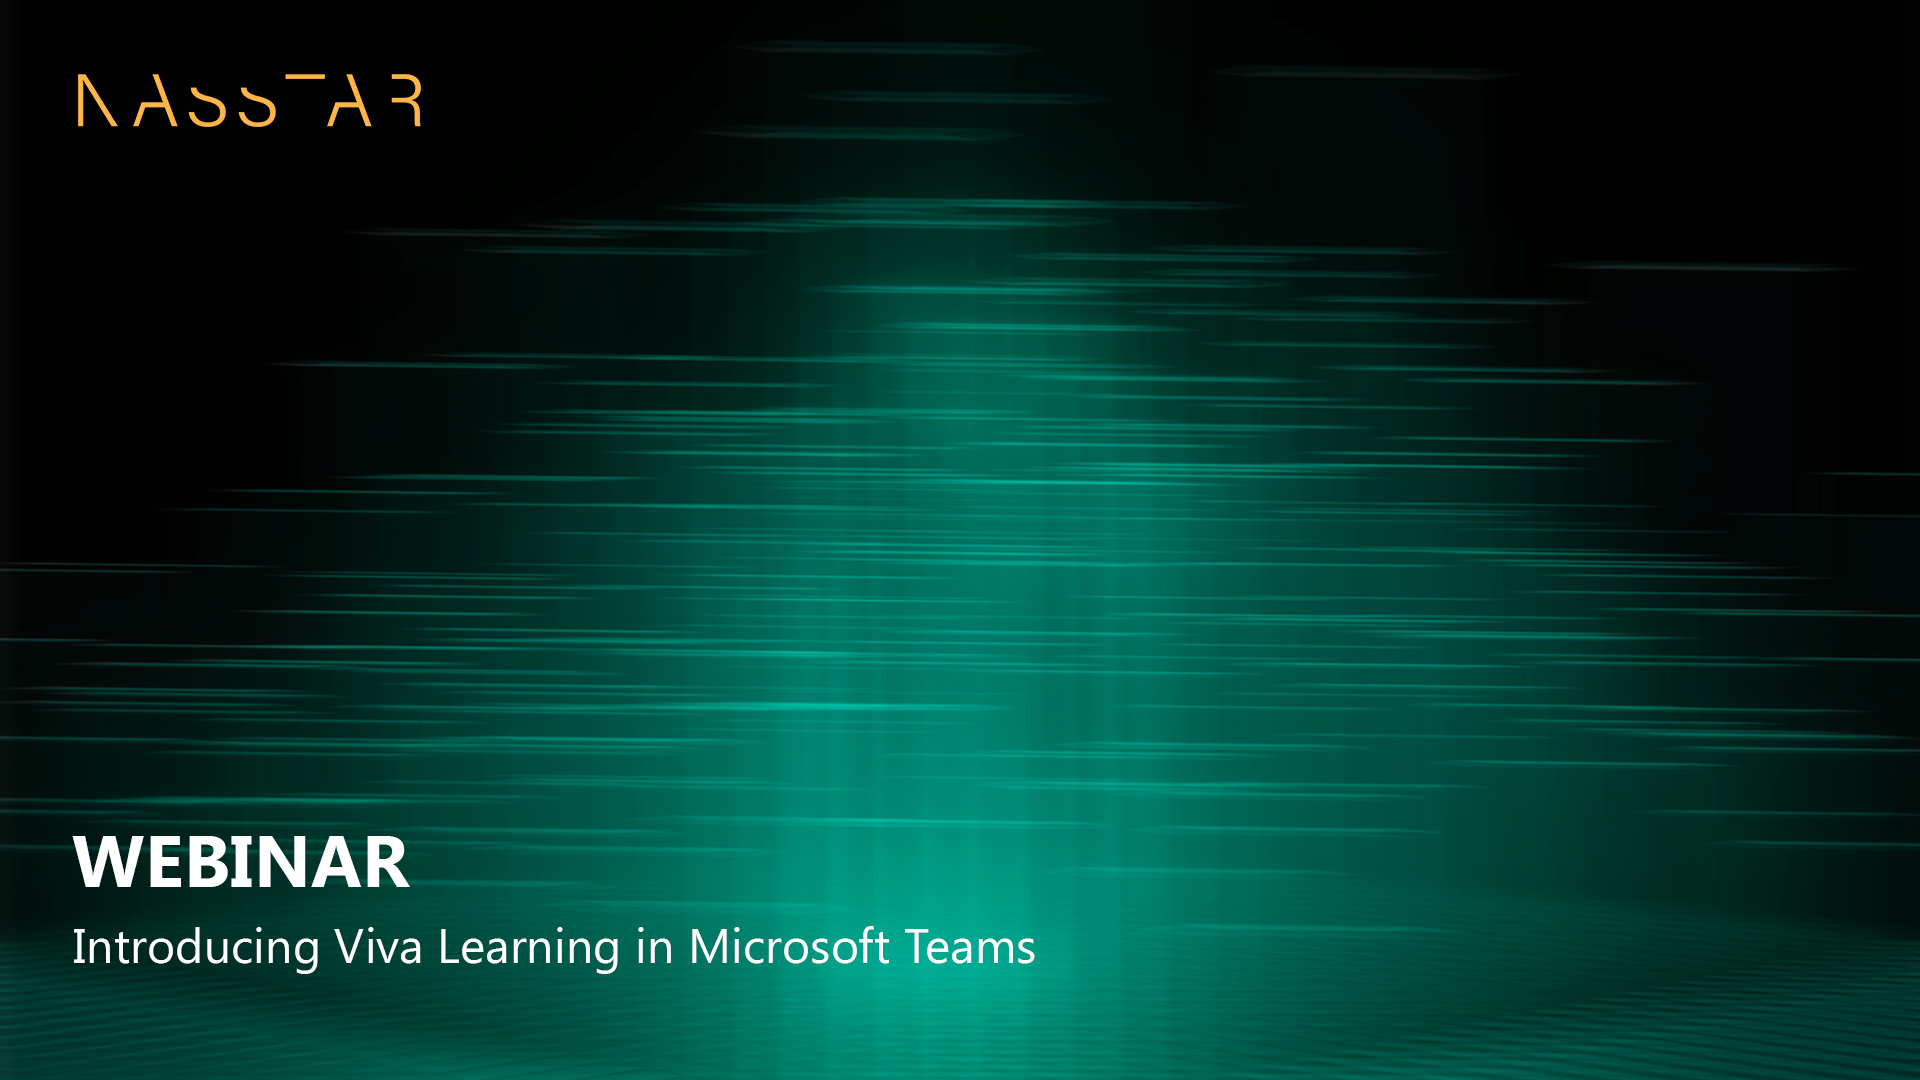 Introducing Viva Learning in Microsoft Teams